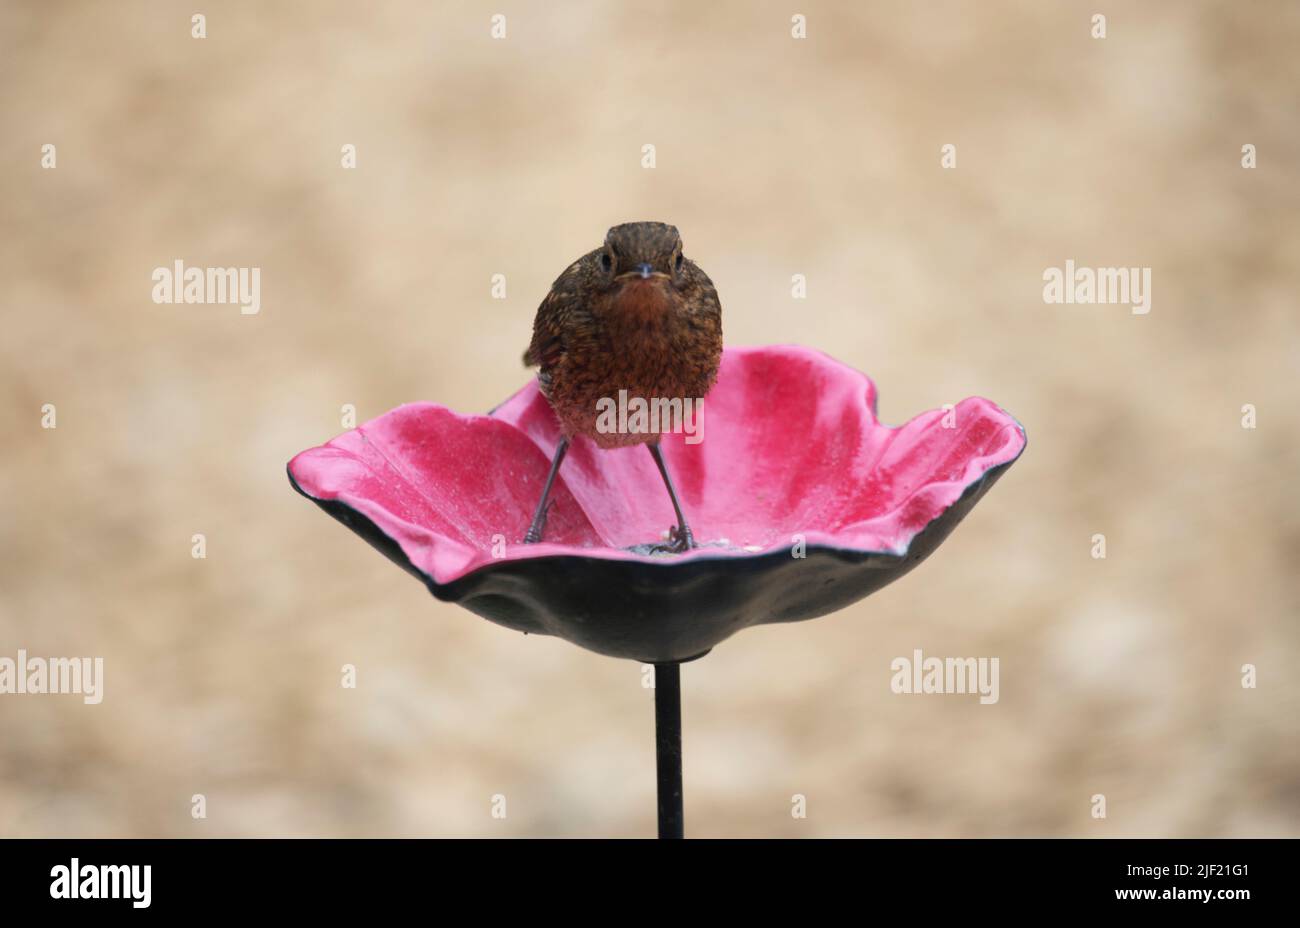 Fledgling Robin on a Ceramic Daffodil Flower Bird Feeder - British Garden Birds Stock Photo